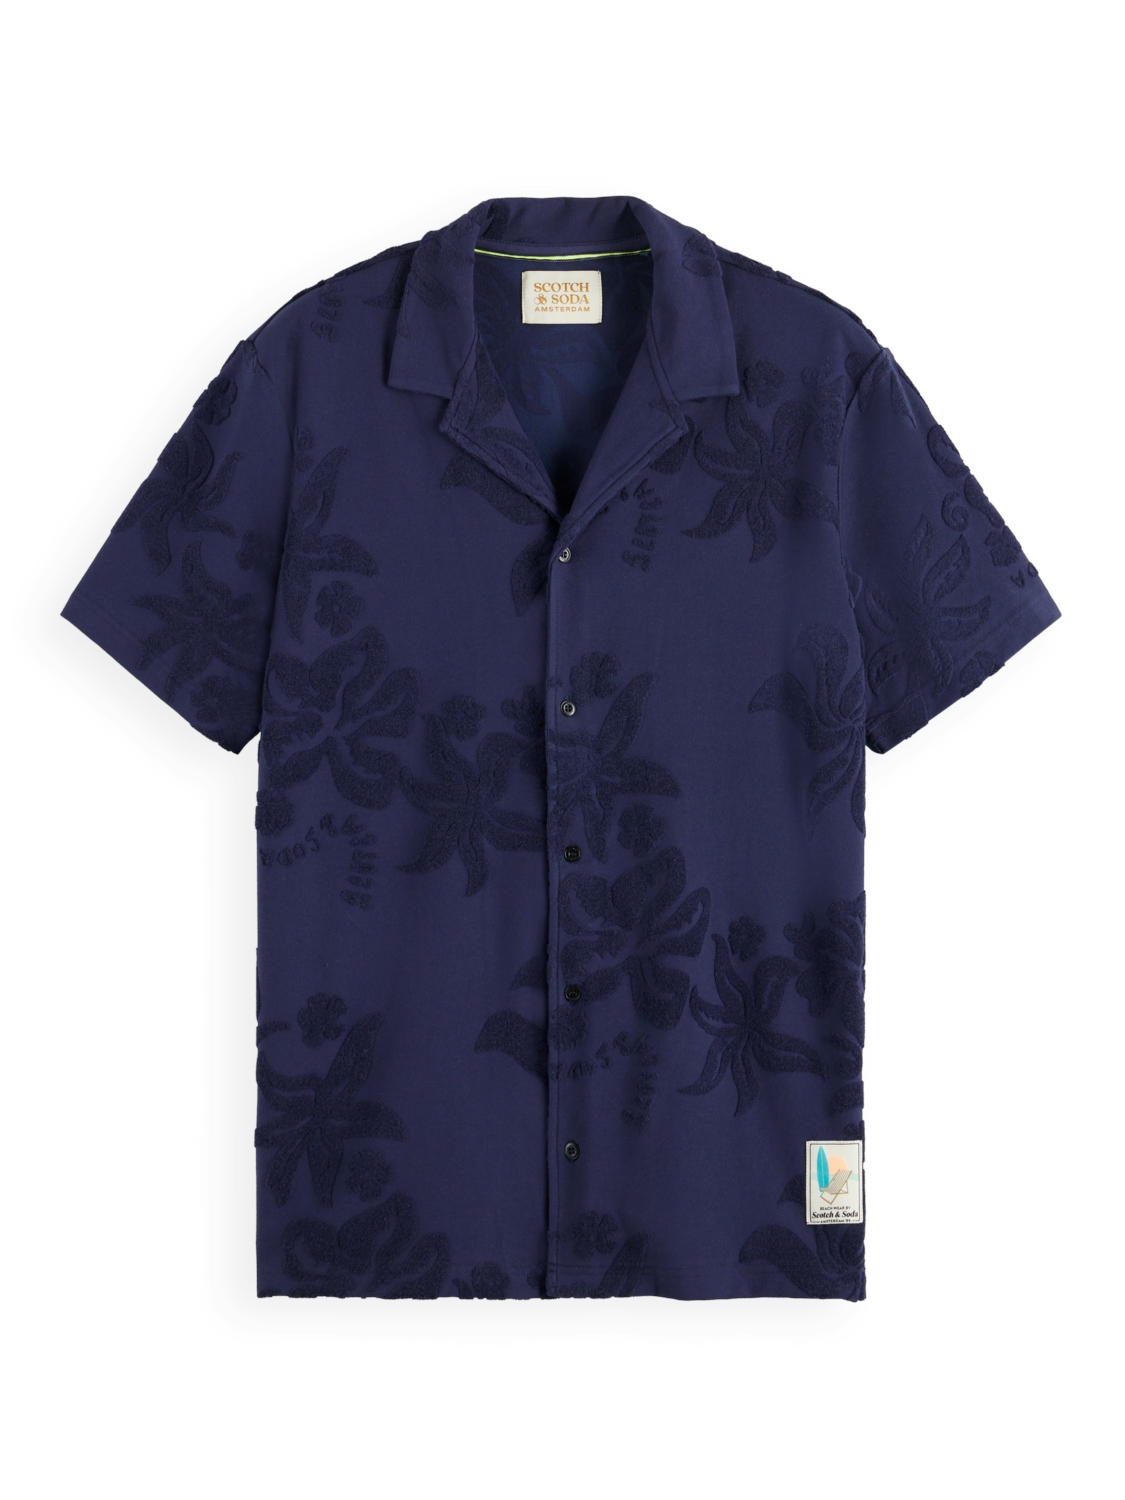 Scotch & Soda Terry Jacquard short sleeve shirt Navy Blue 1